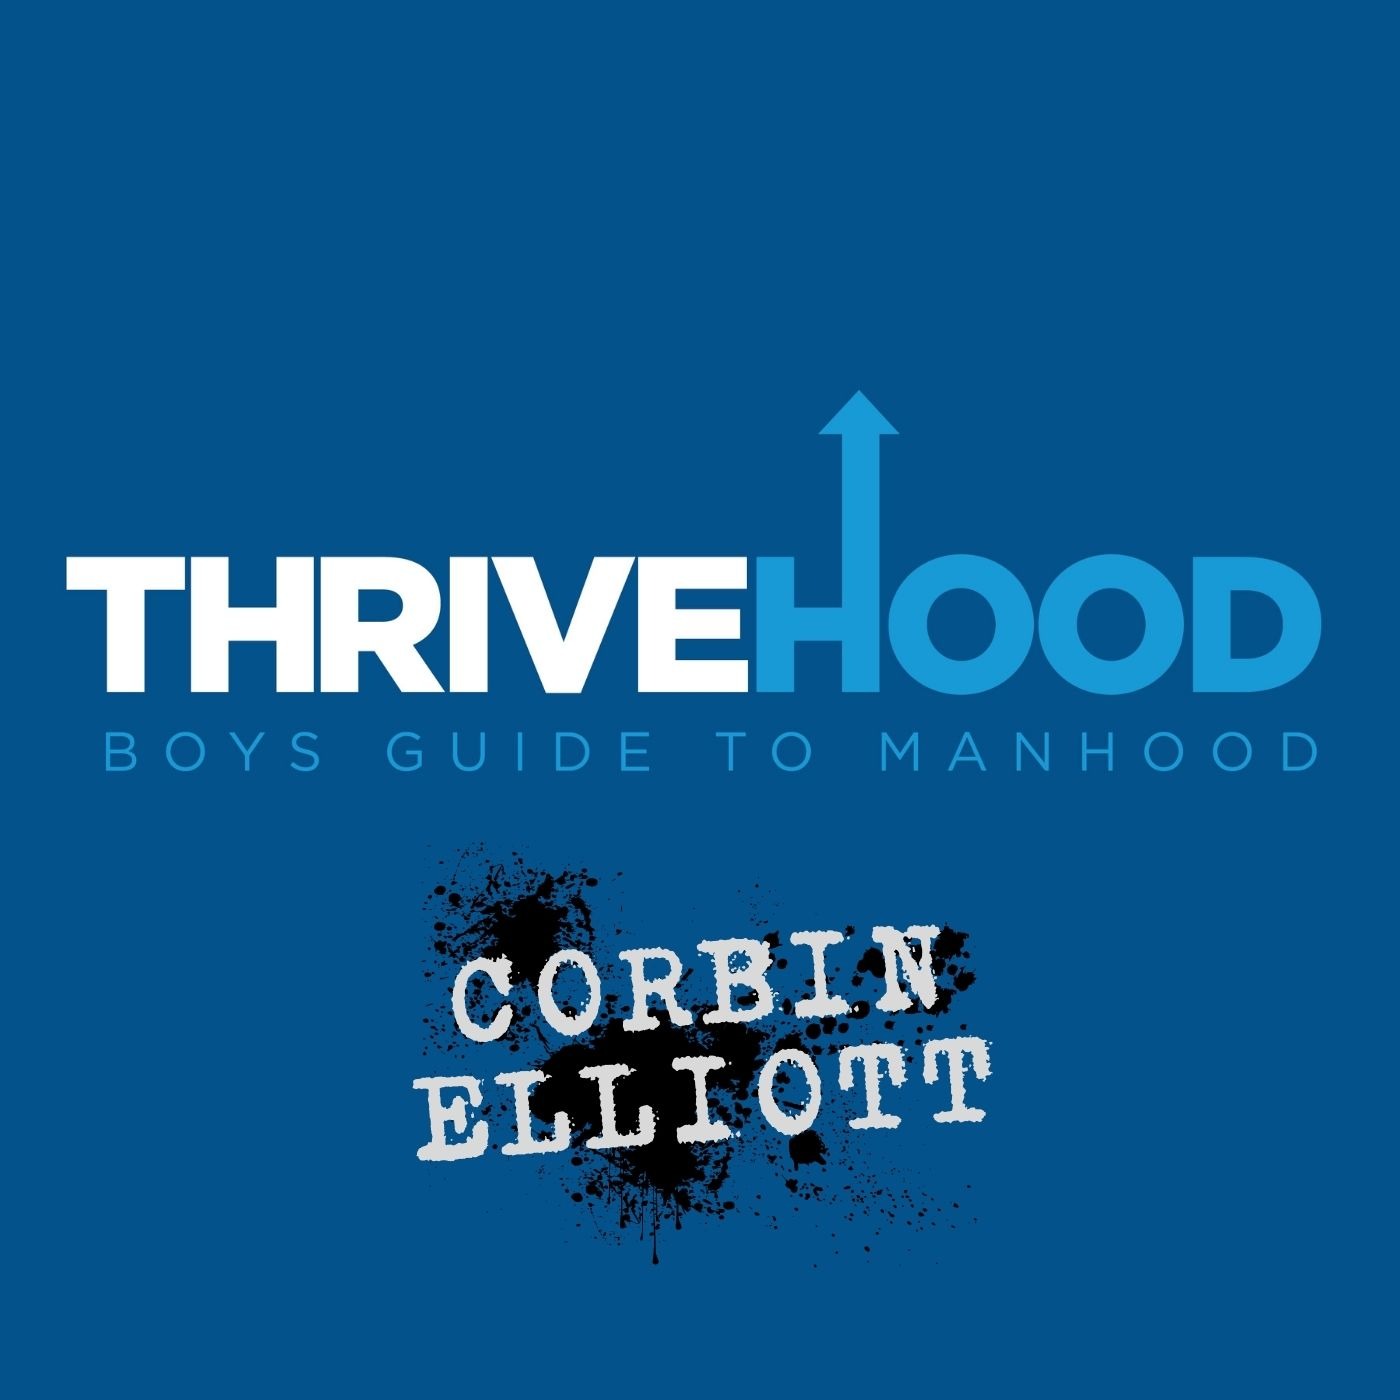 Corbin Elliott:  Finding Your Peace And Purpose